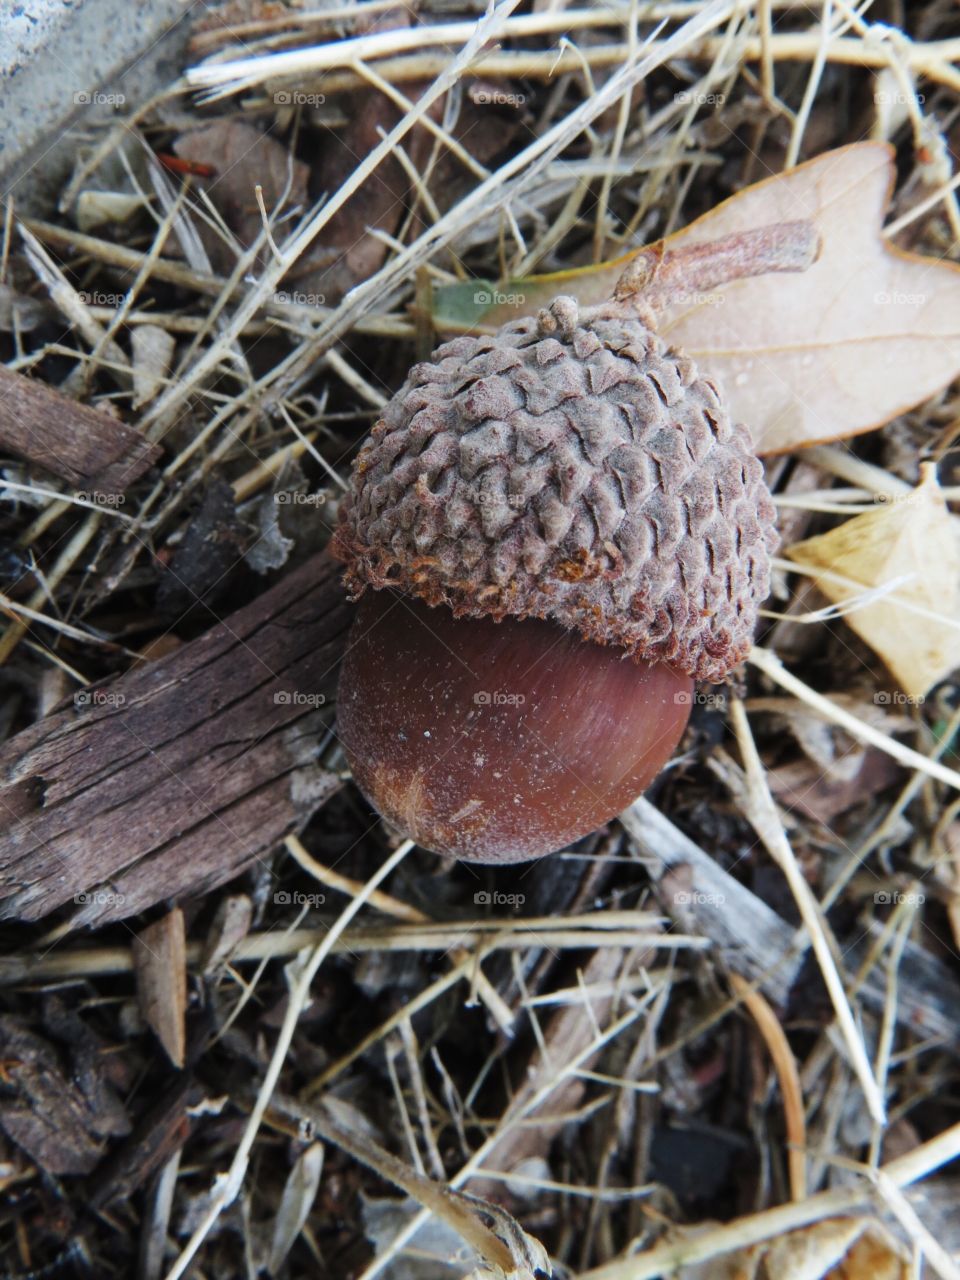 An acorn